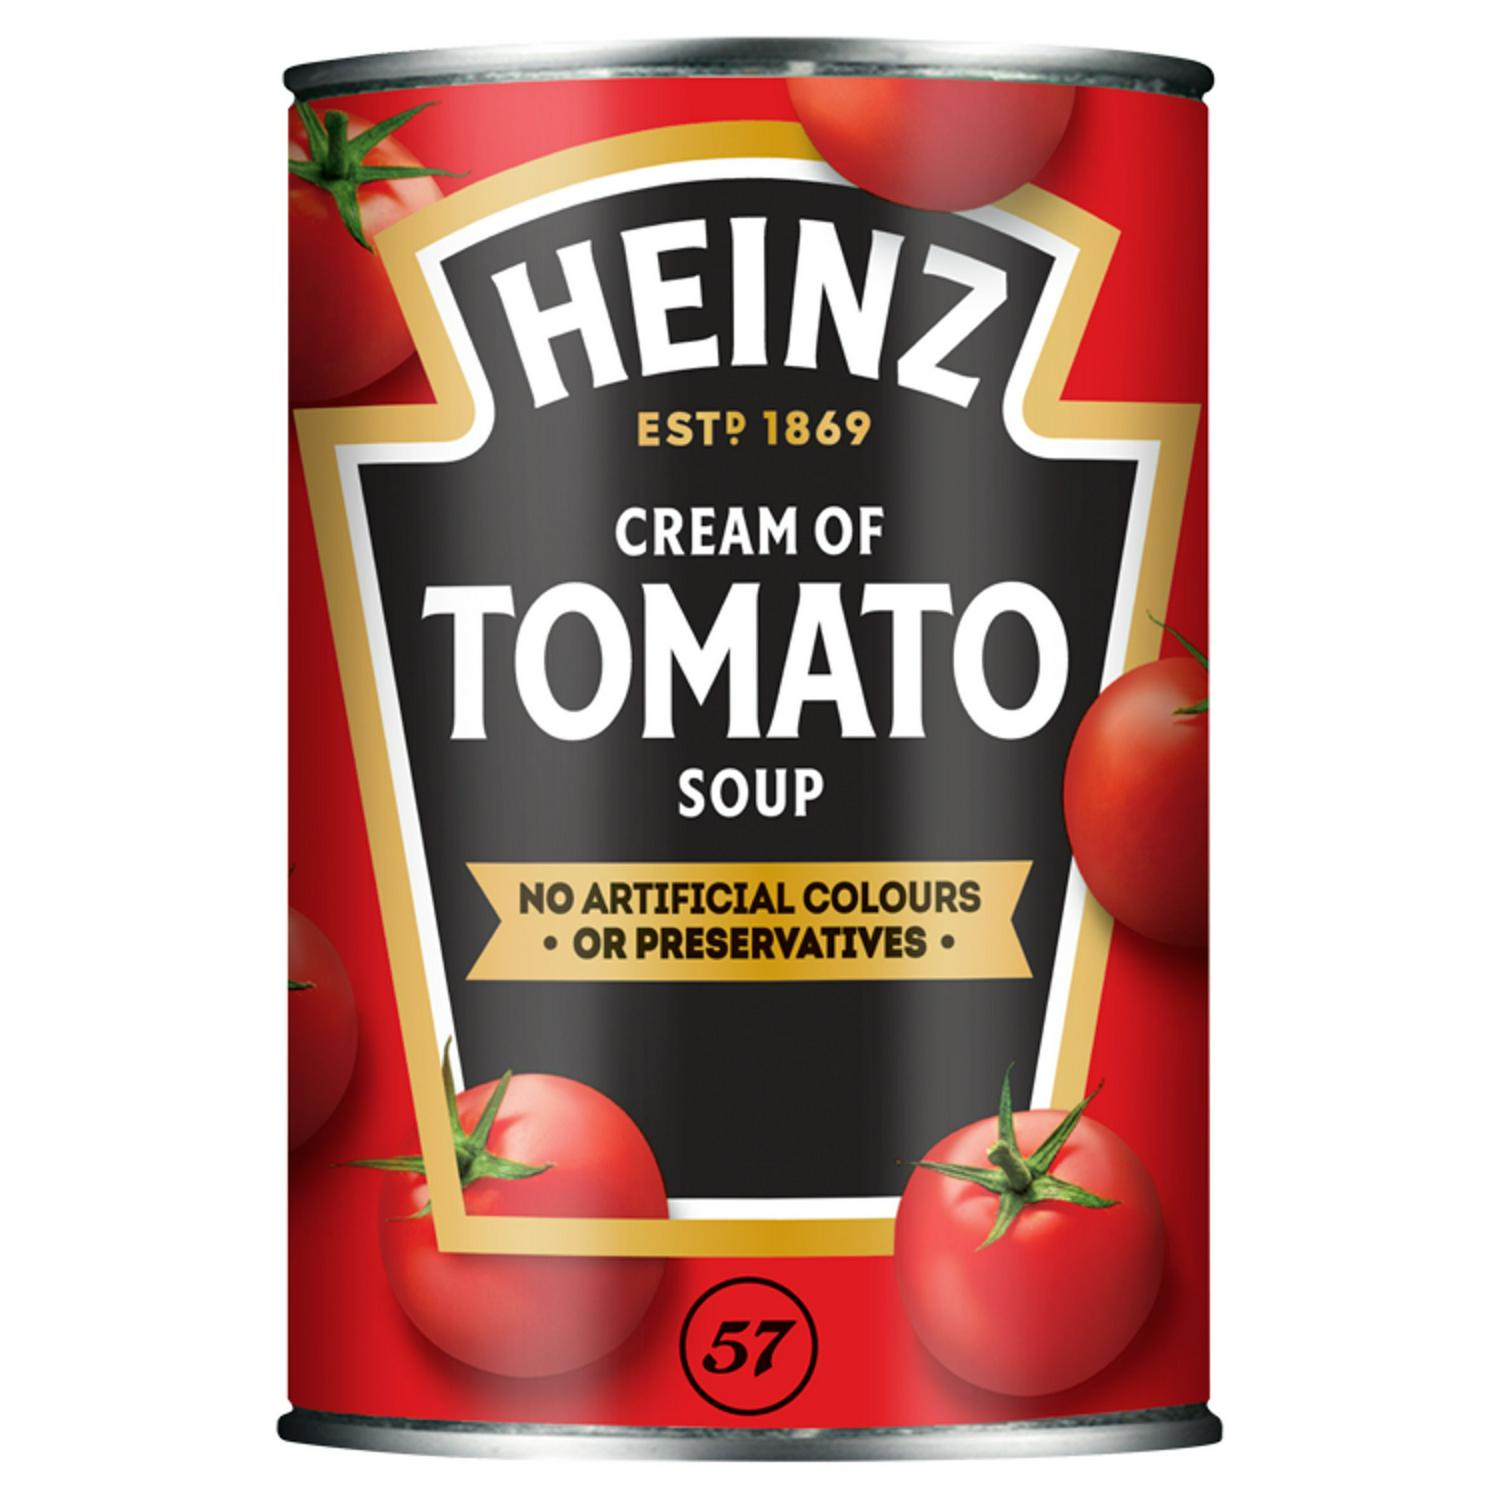 Heinz Cream of Tomato Soup 400g ไฮนซ์ ซุปครีมมะเขือเทศพร้อมบริโภค 400g